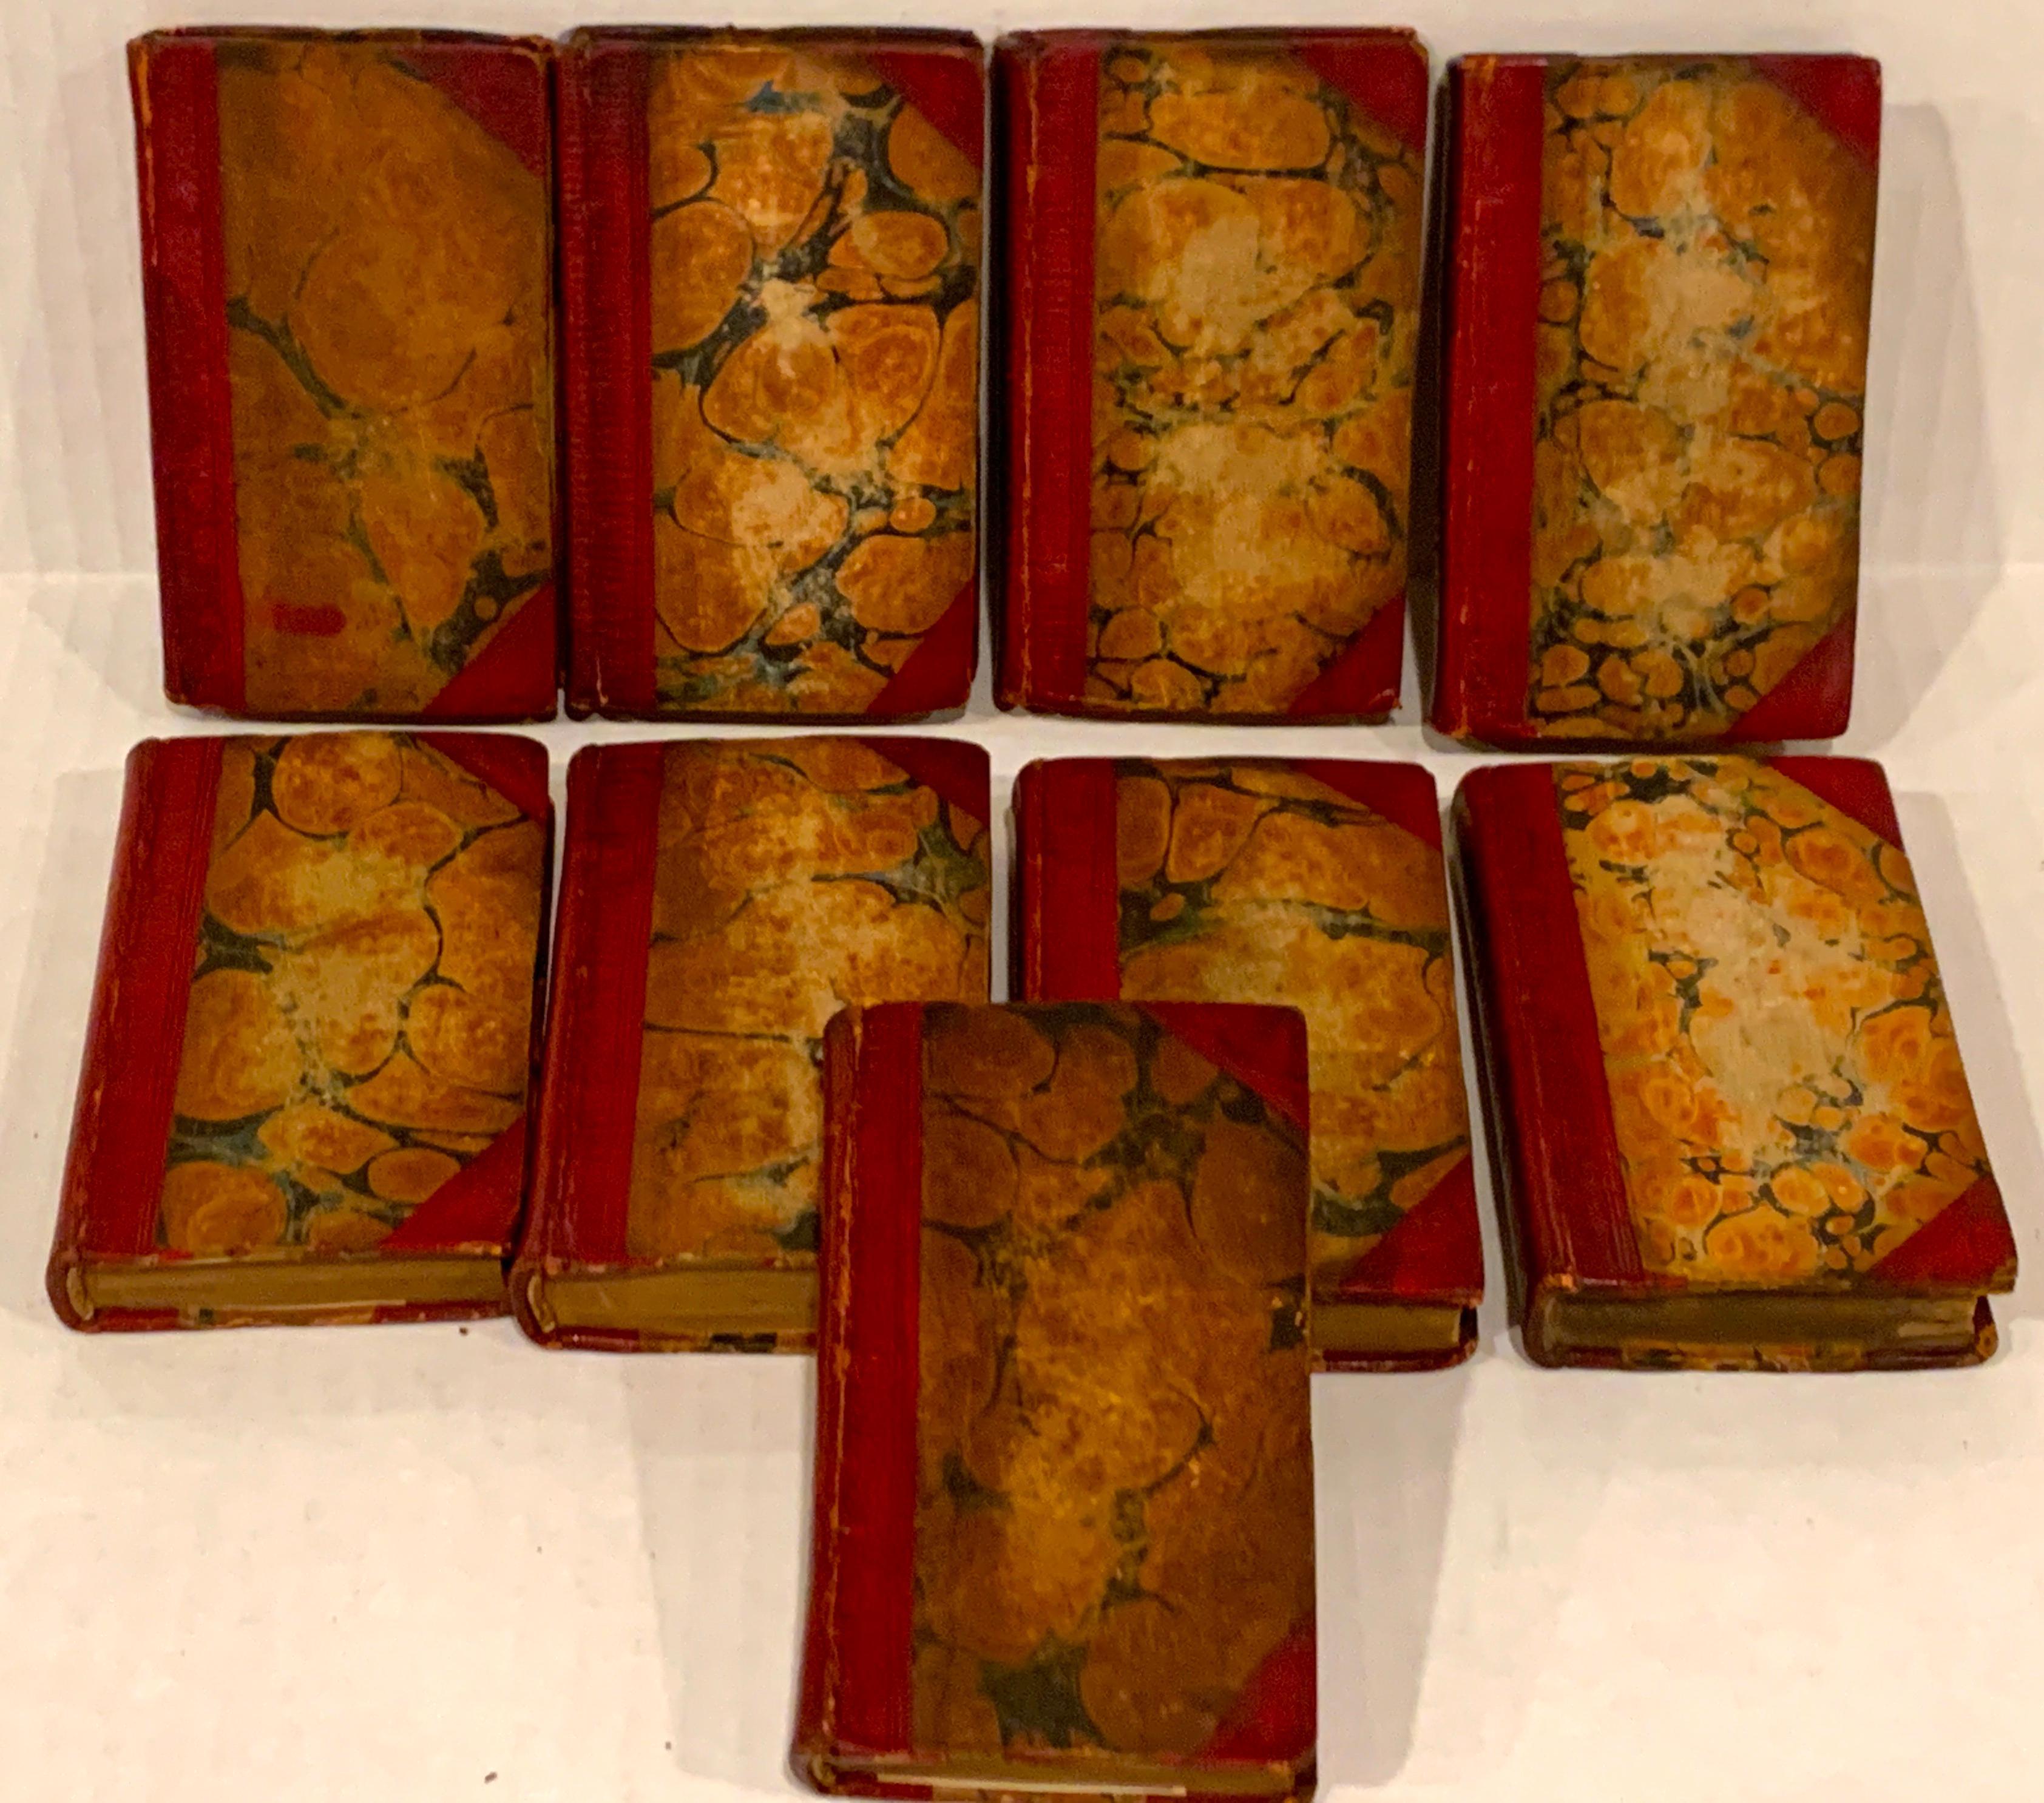 Georgian William Shakespeare's Plays in Miniature 9 Volume Leather Bound Volumes, 1803